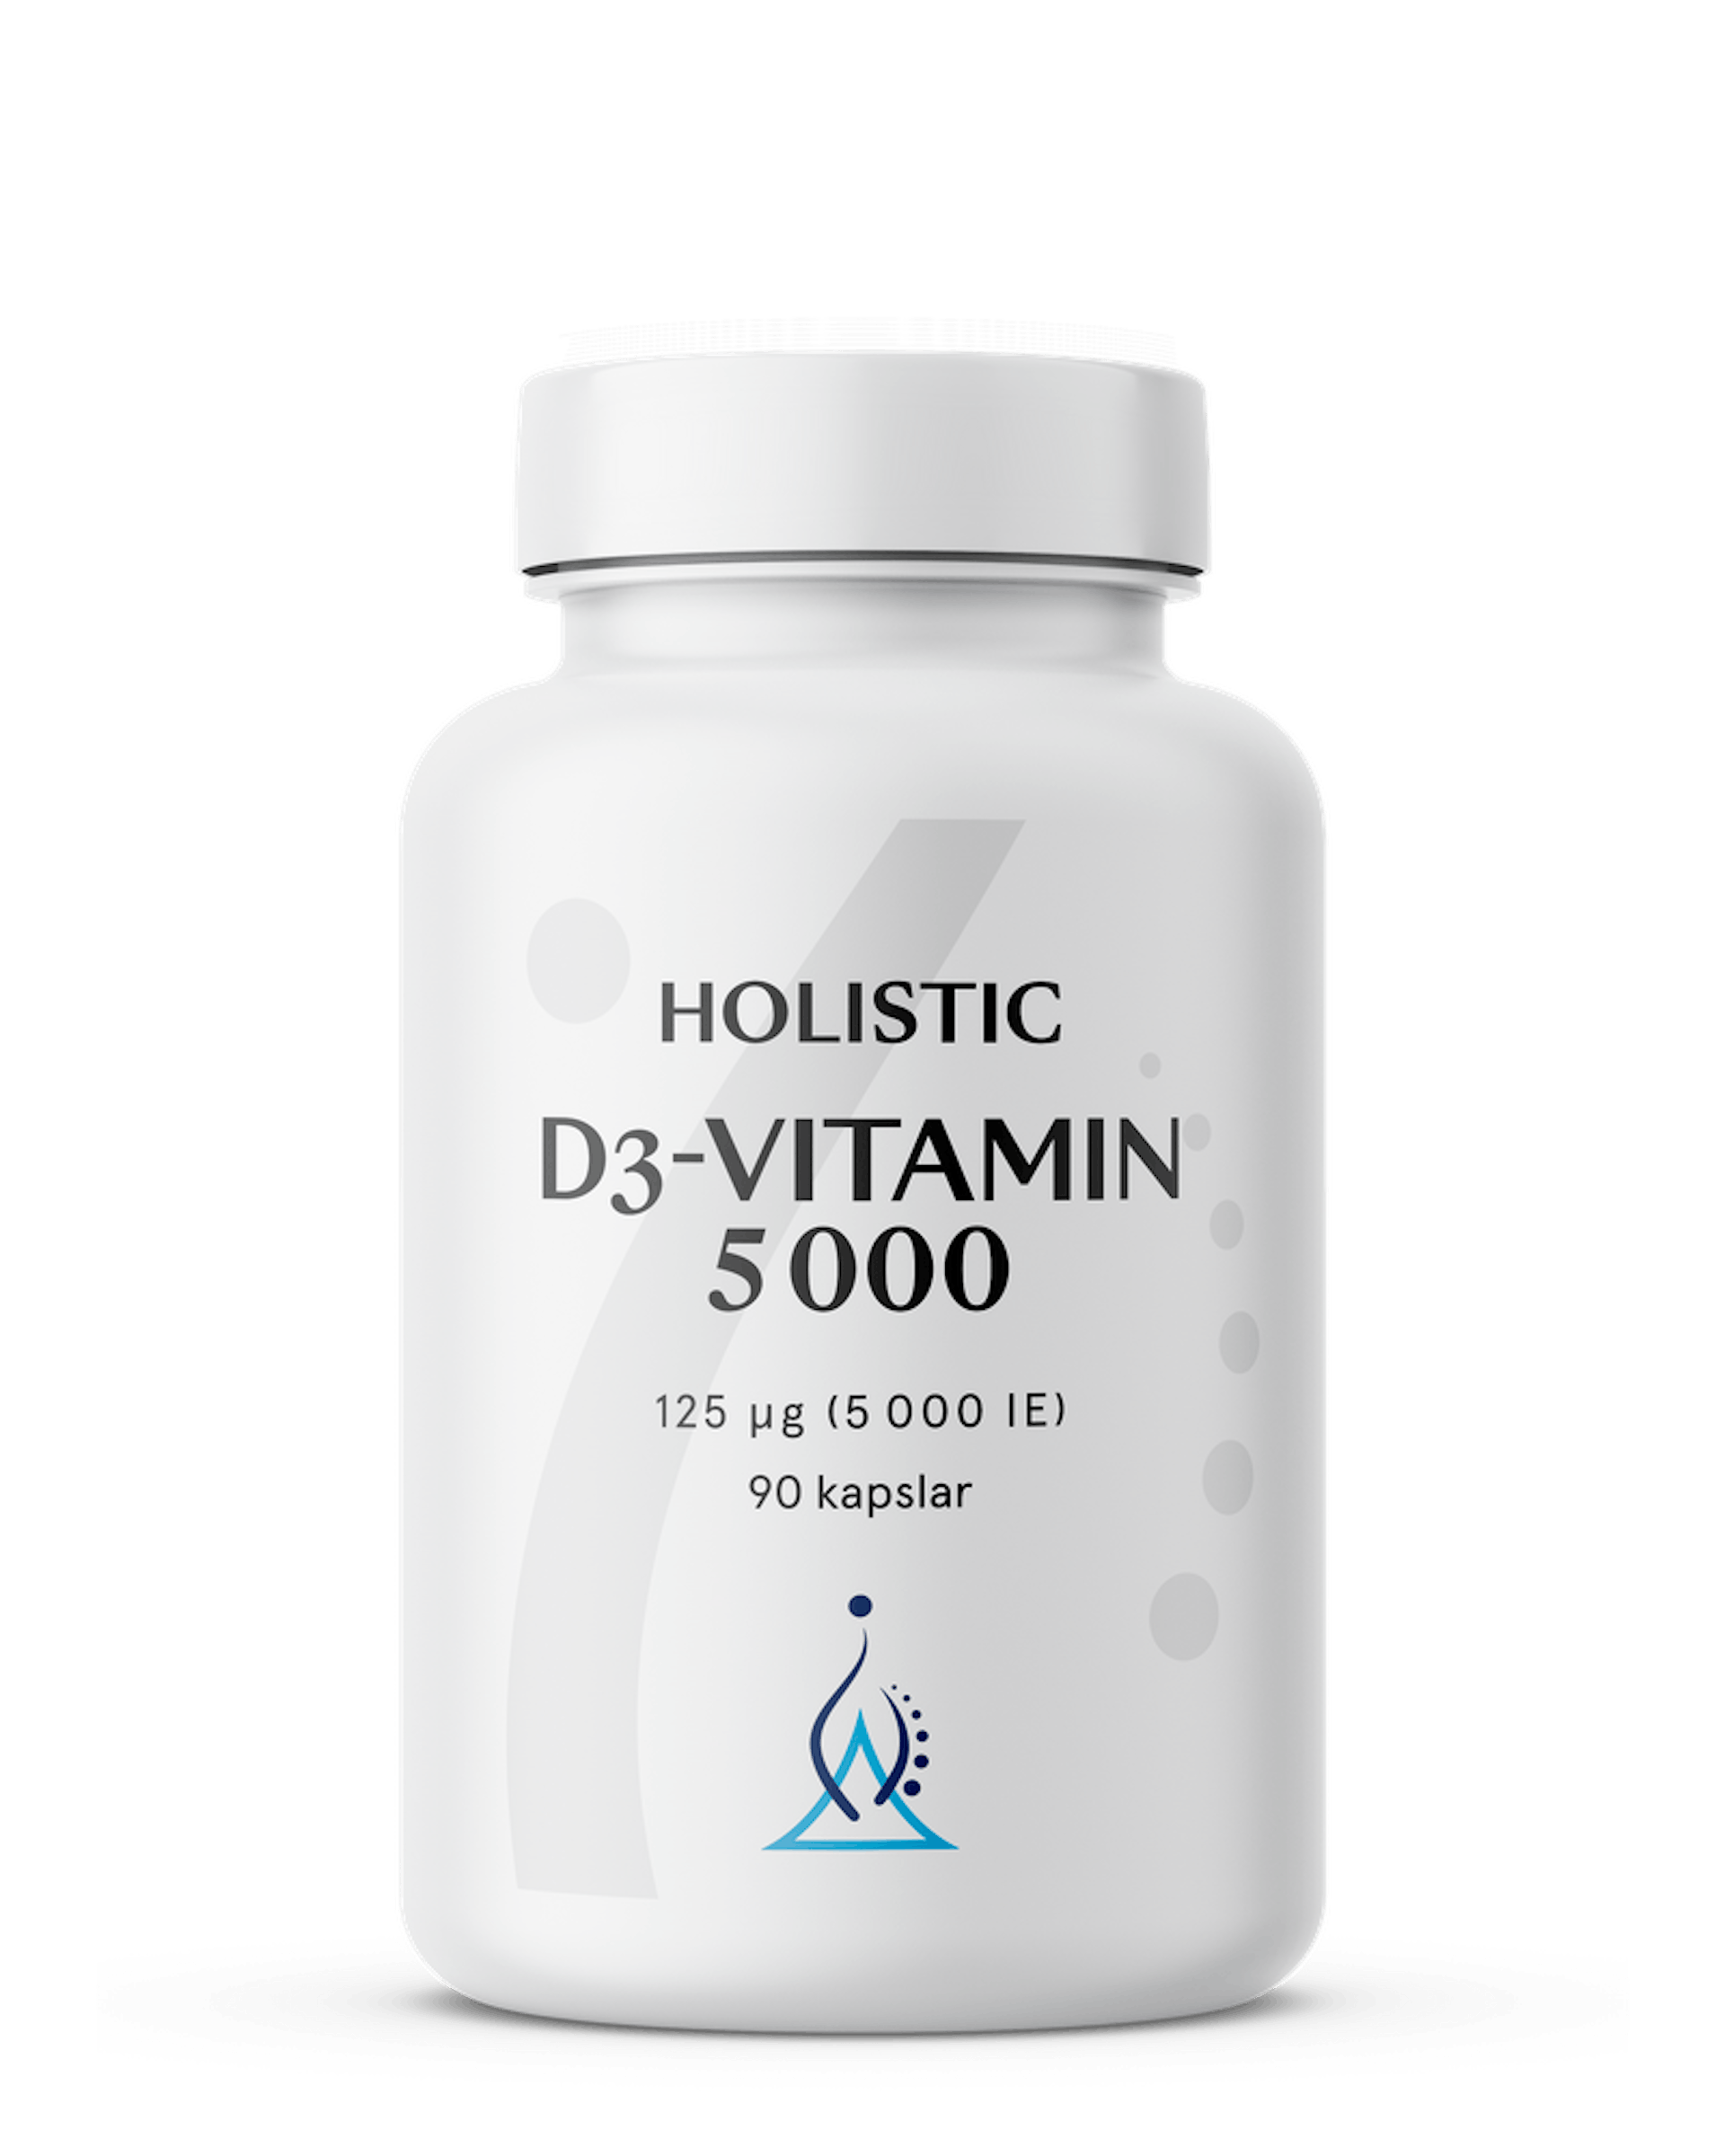 D3-vitamin 5000, 90 kapslar (1 av 1)